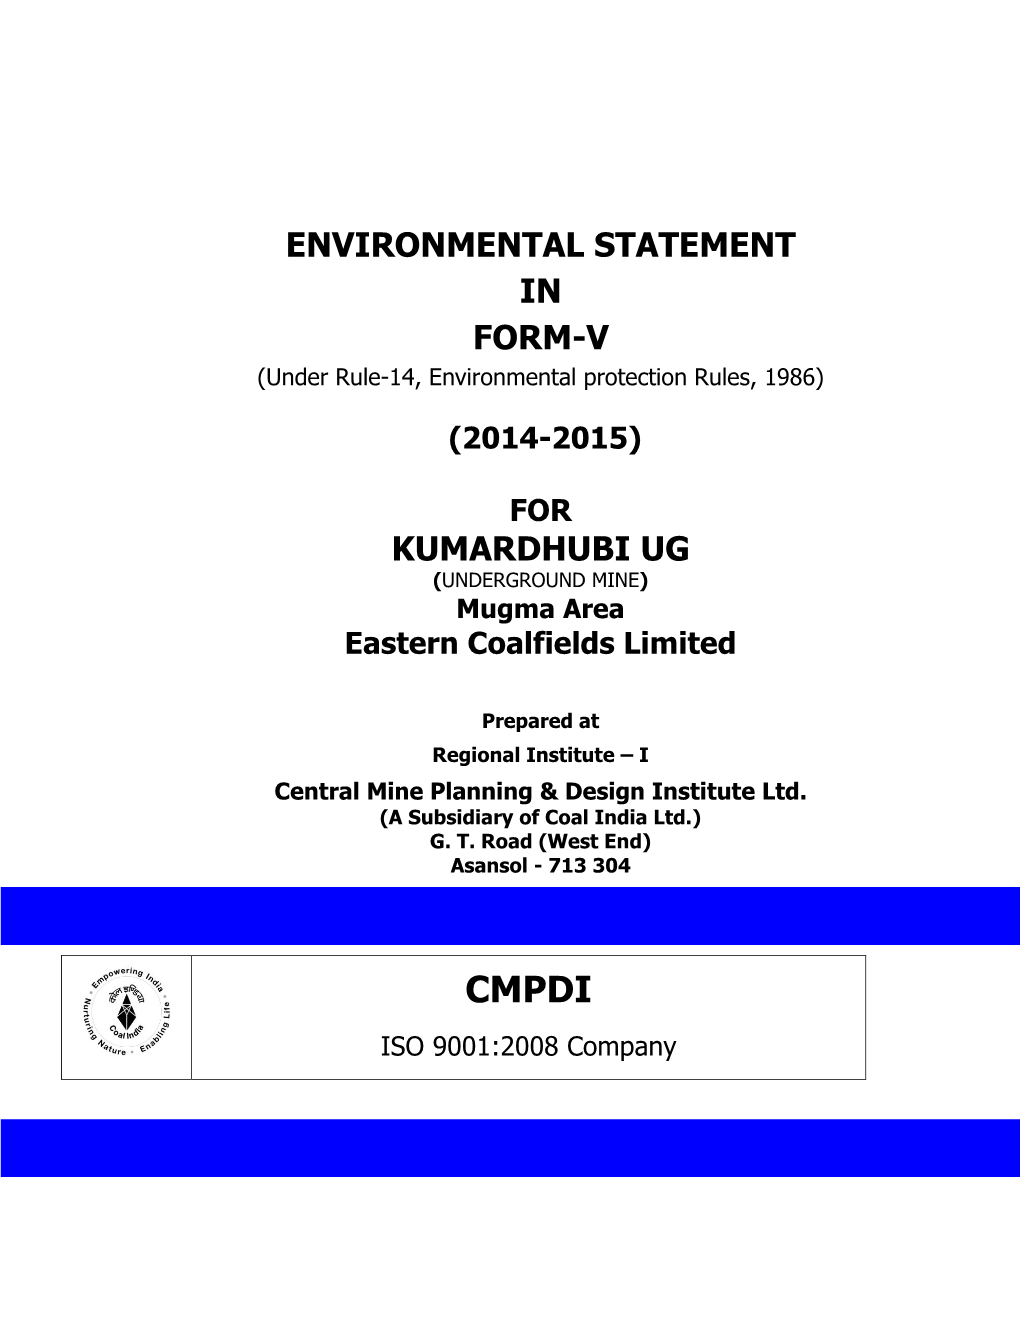 Environmental Statement in Form-V Kumardhubi Ug